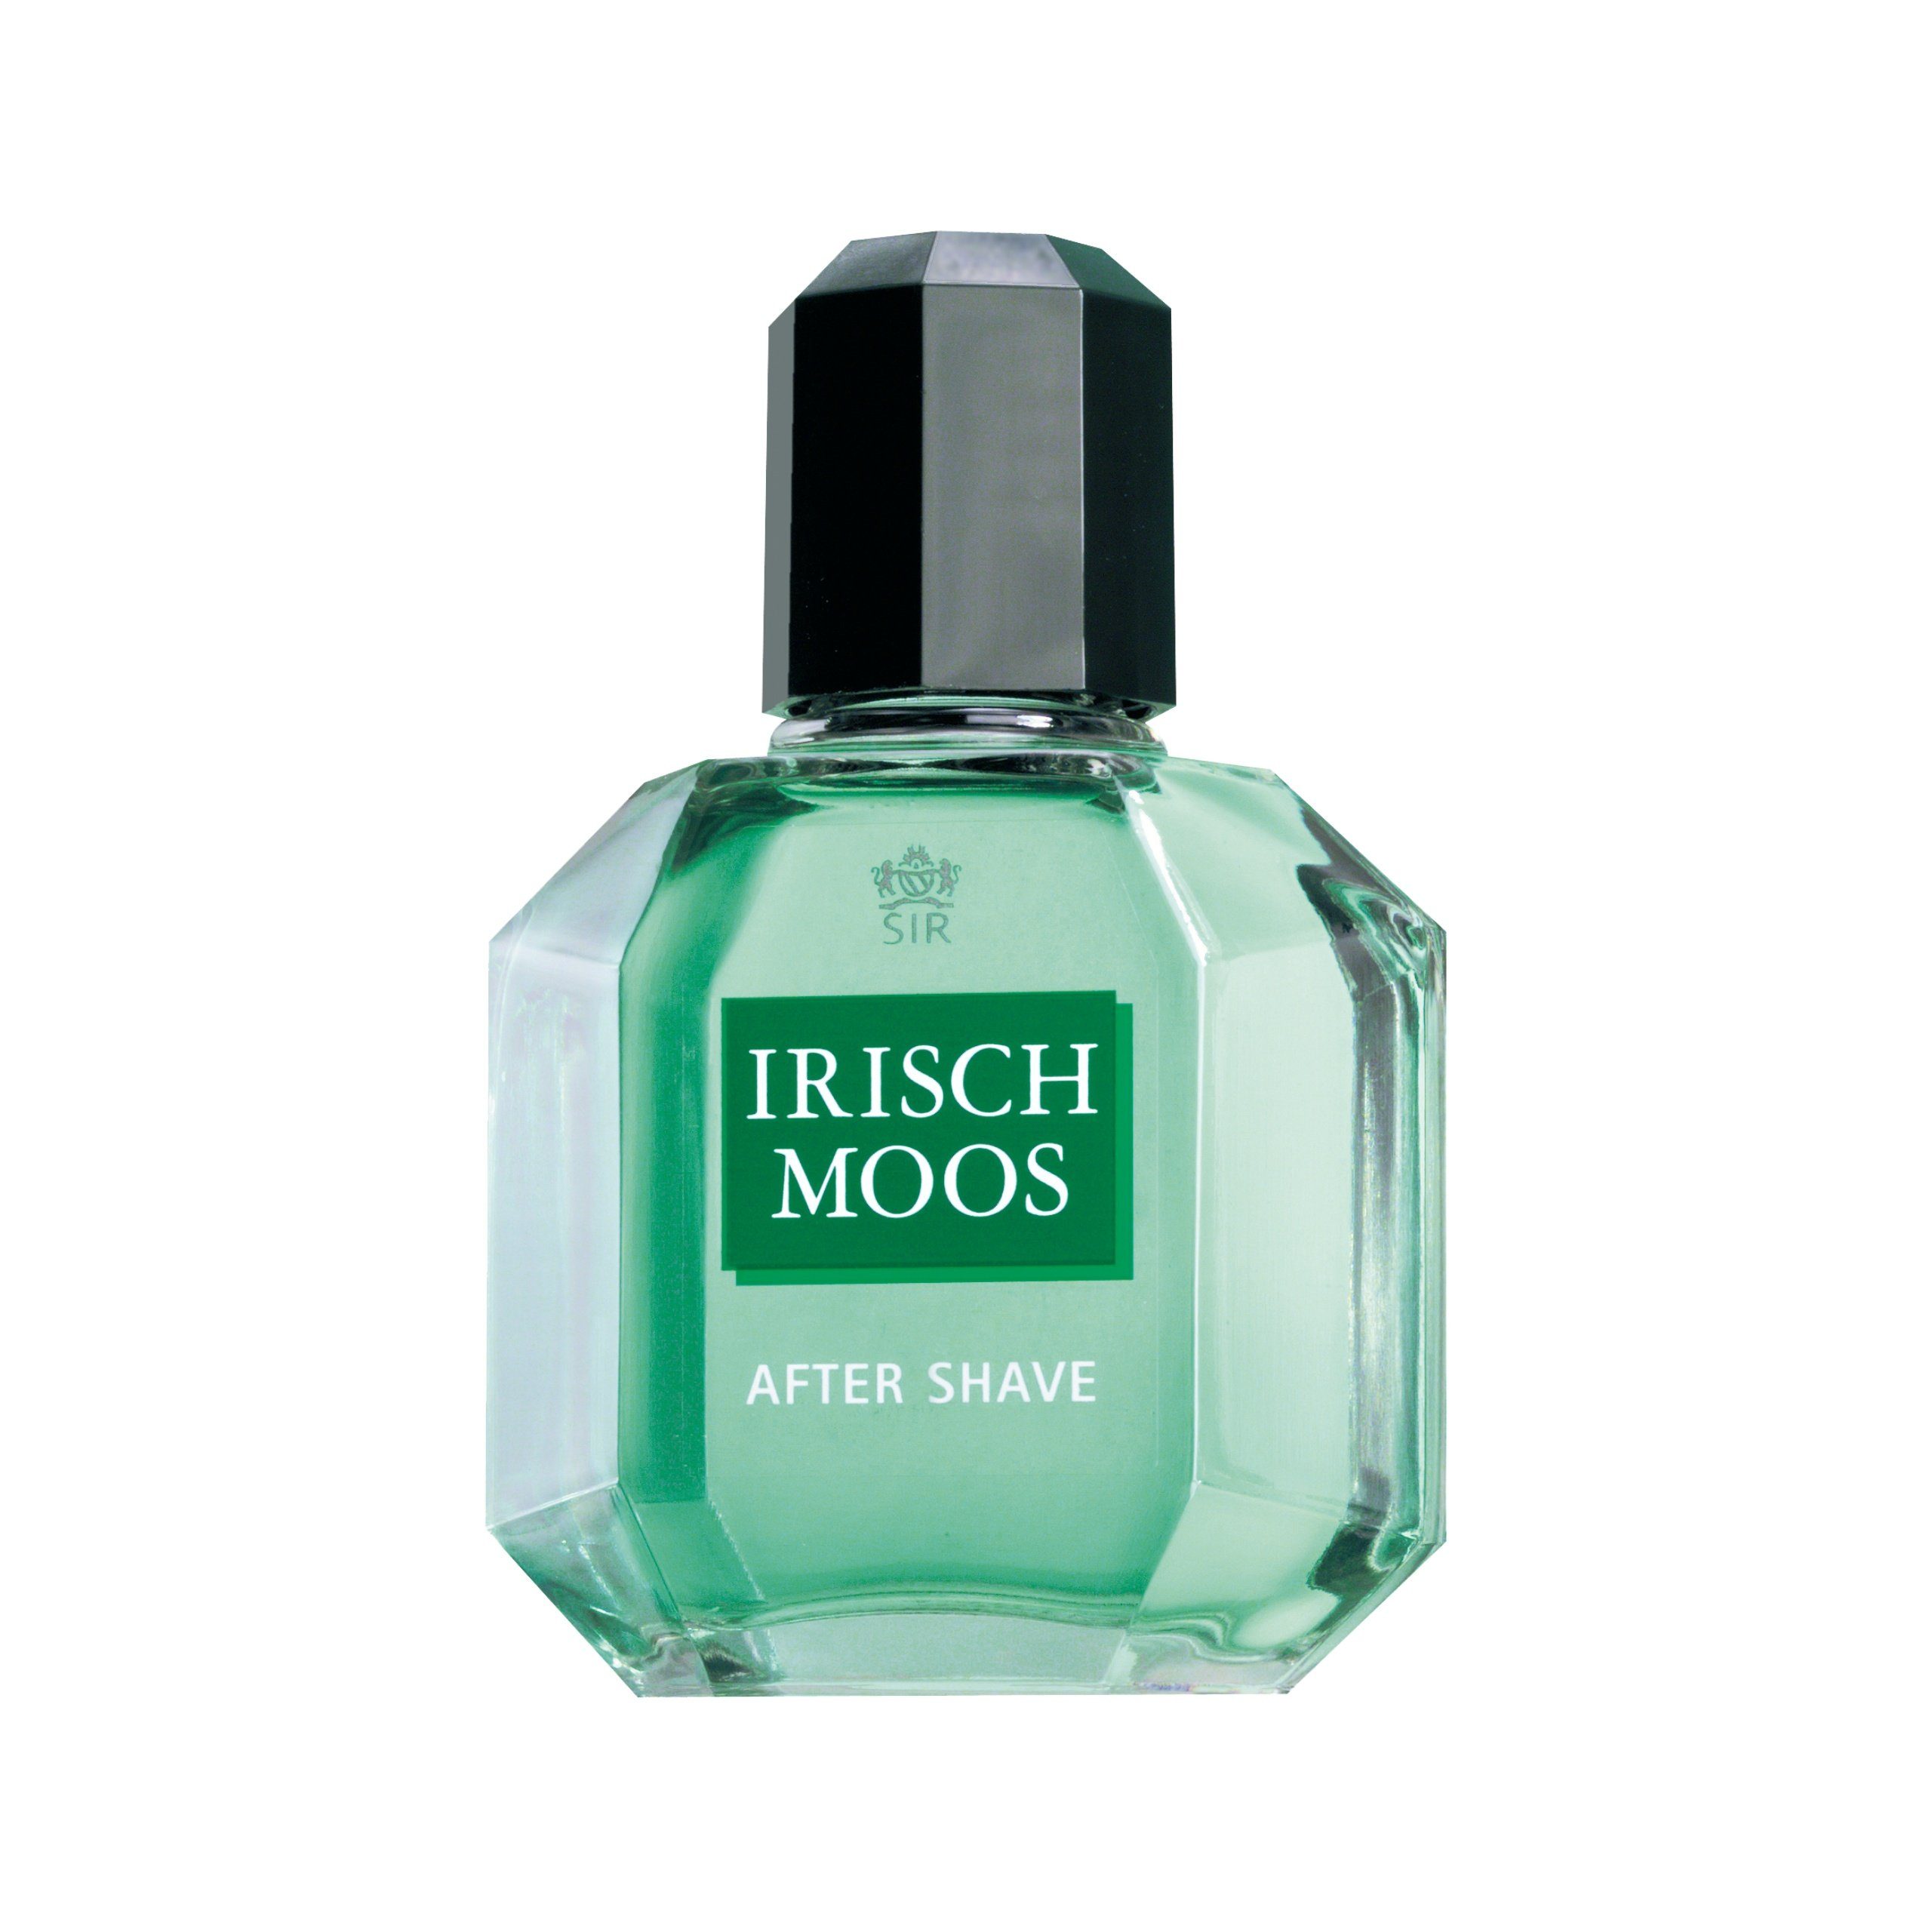 Sir Irisch Moos Gesichts-Reinigungslotion SIR IRISCH MOOS After Shave Lotion 150 ml | Reinigungsgele